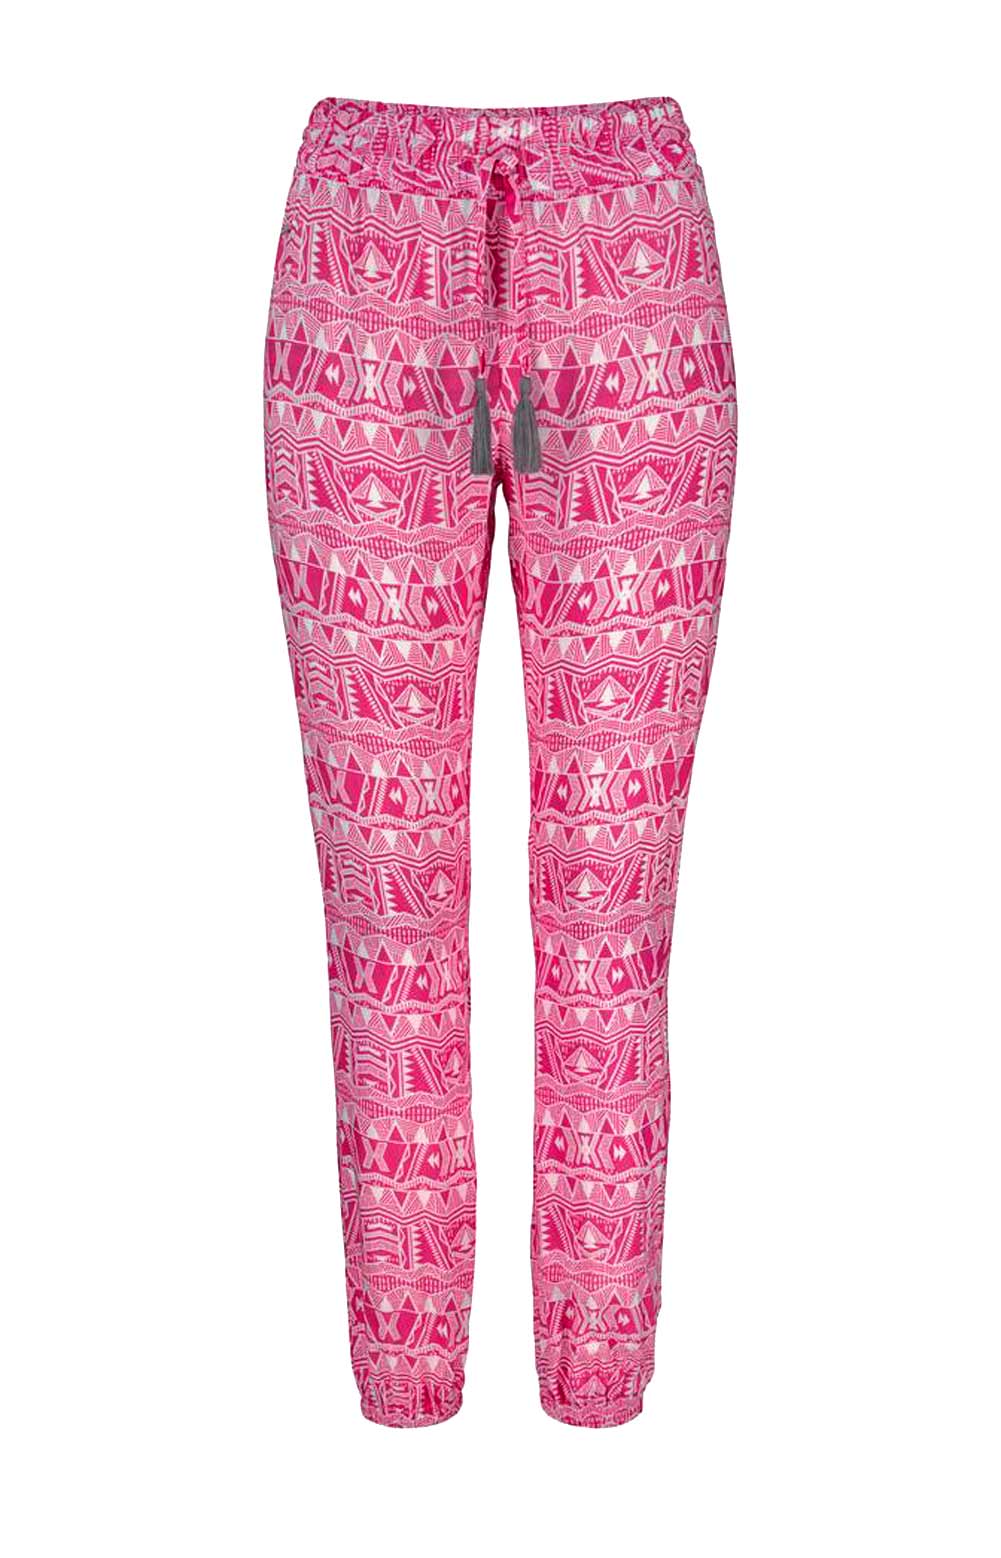 KANGAROOS Damen Marken-Hose, pink-weiß